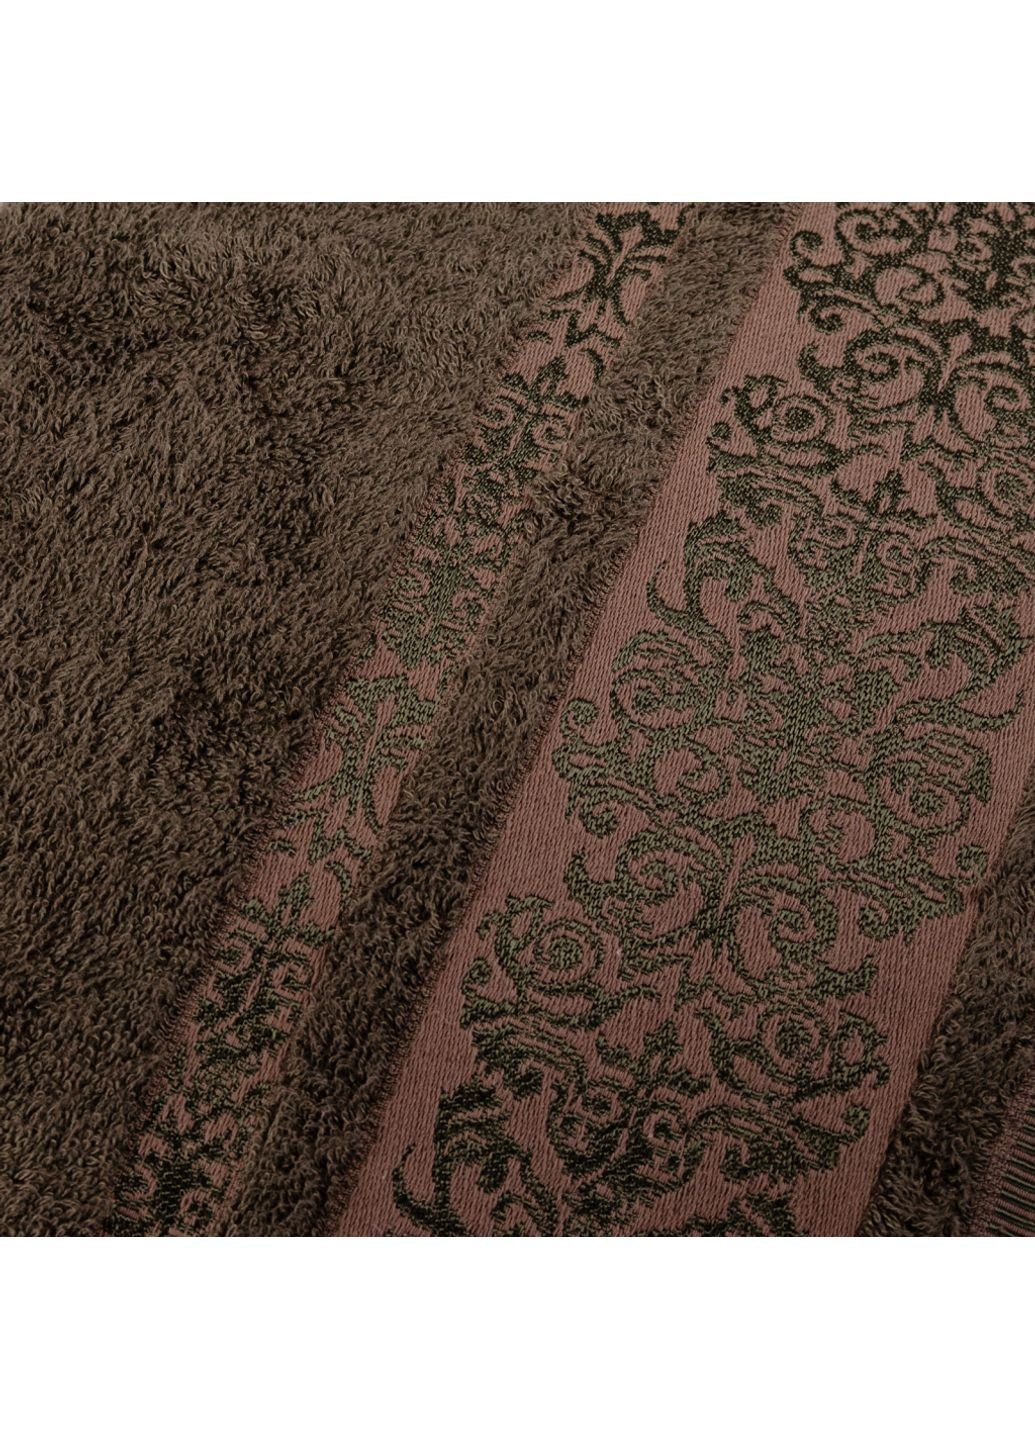 Home Line полотенце махровый bamboo коричневый 50х90 см (127248) коричневый производство - Азербайджан